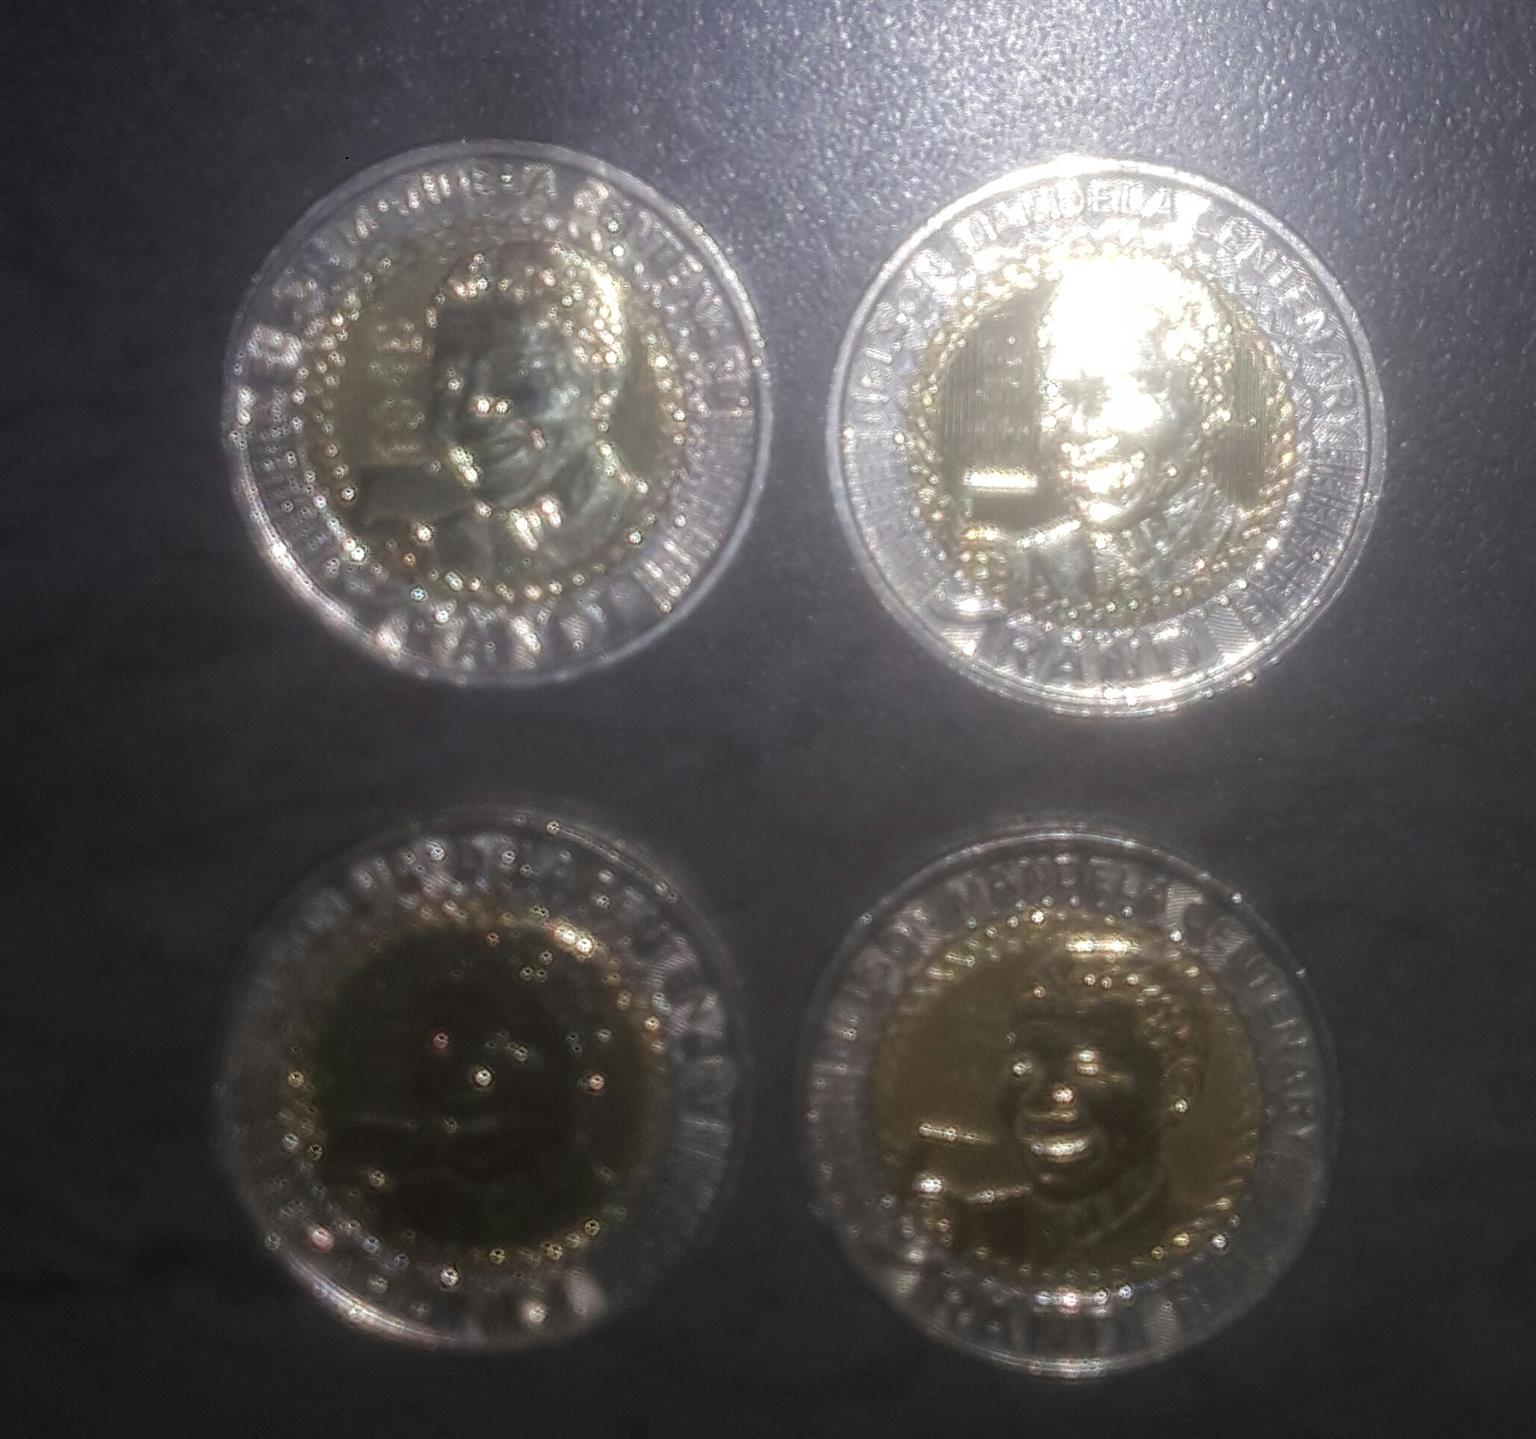 Mandela 90th Birthday coins 2008 & 2018